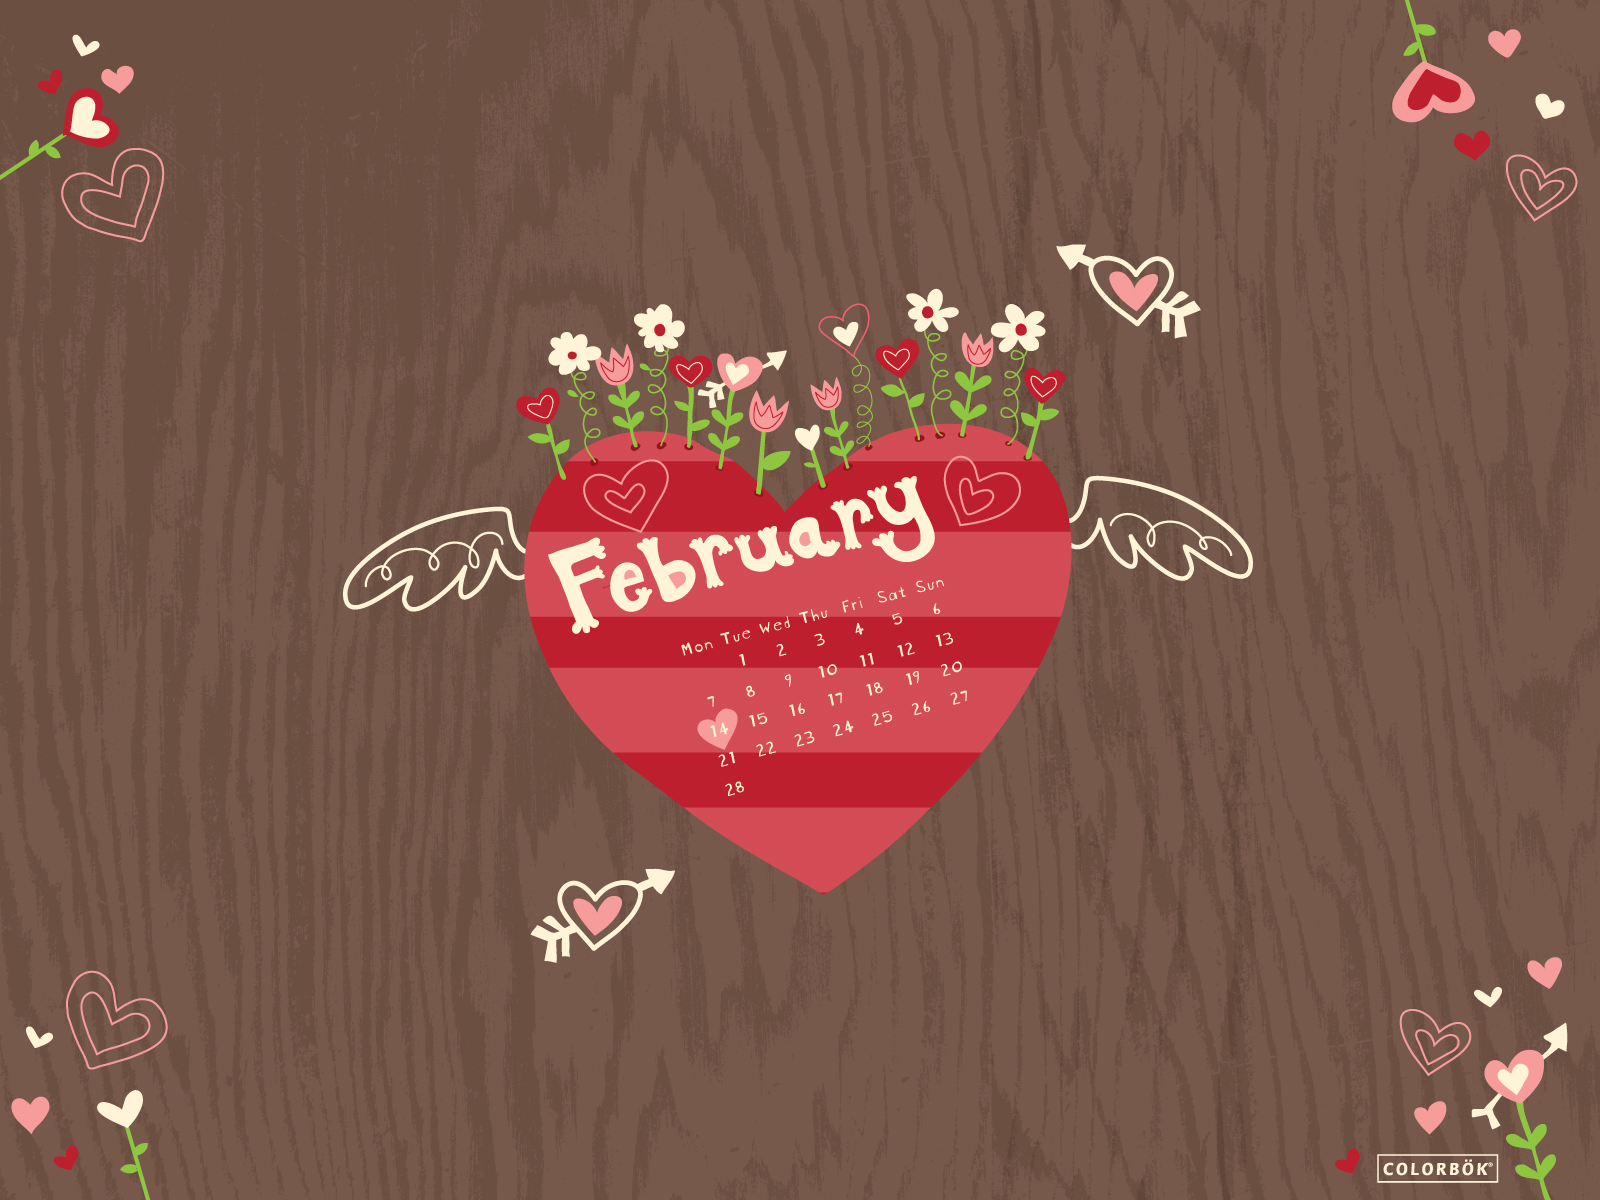 february wallpaper,text,valentine's day,heart,font,illustration